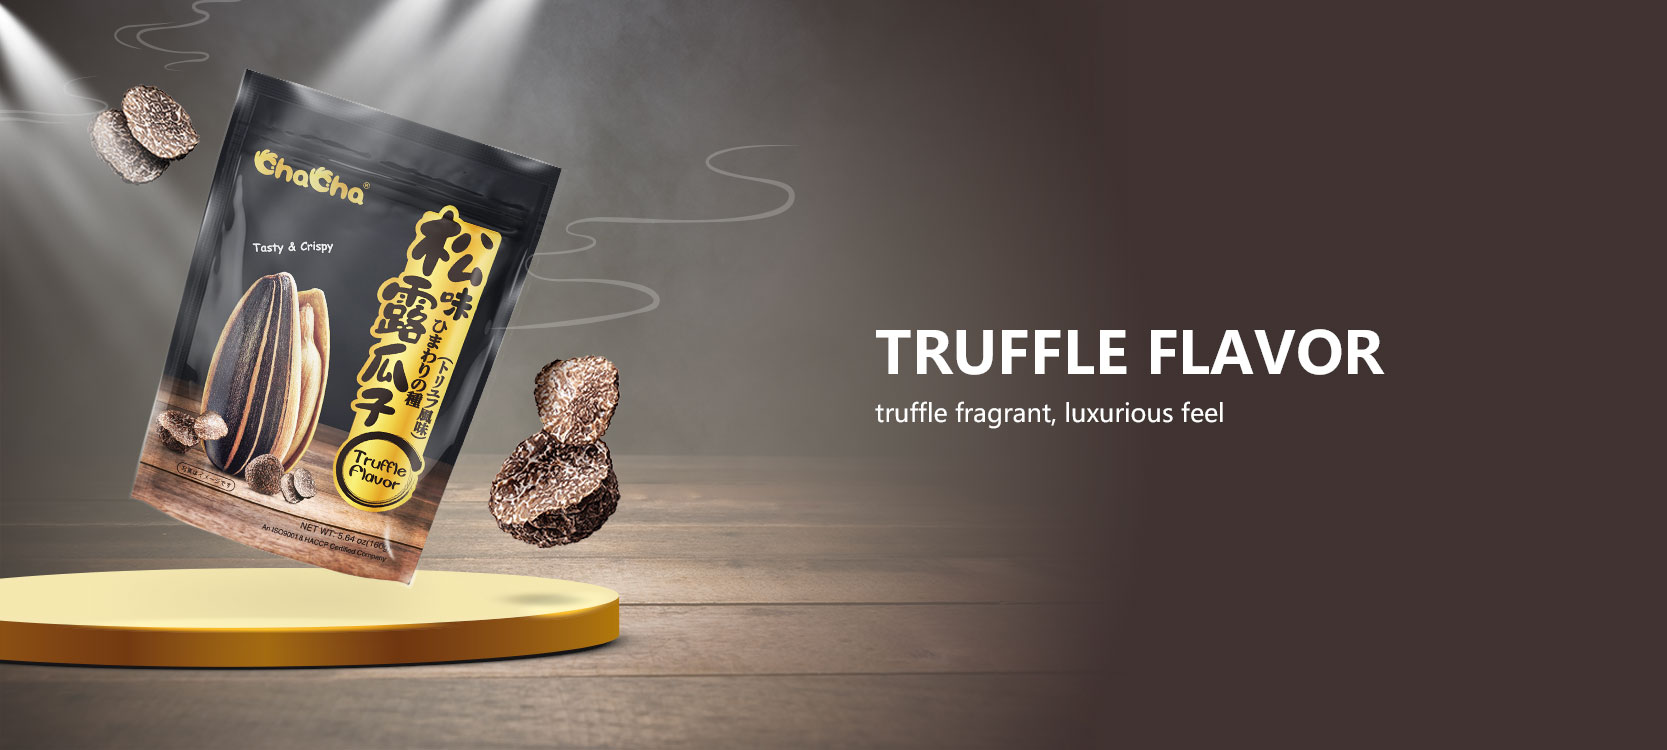 Truffle Flavor